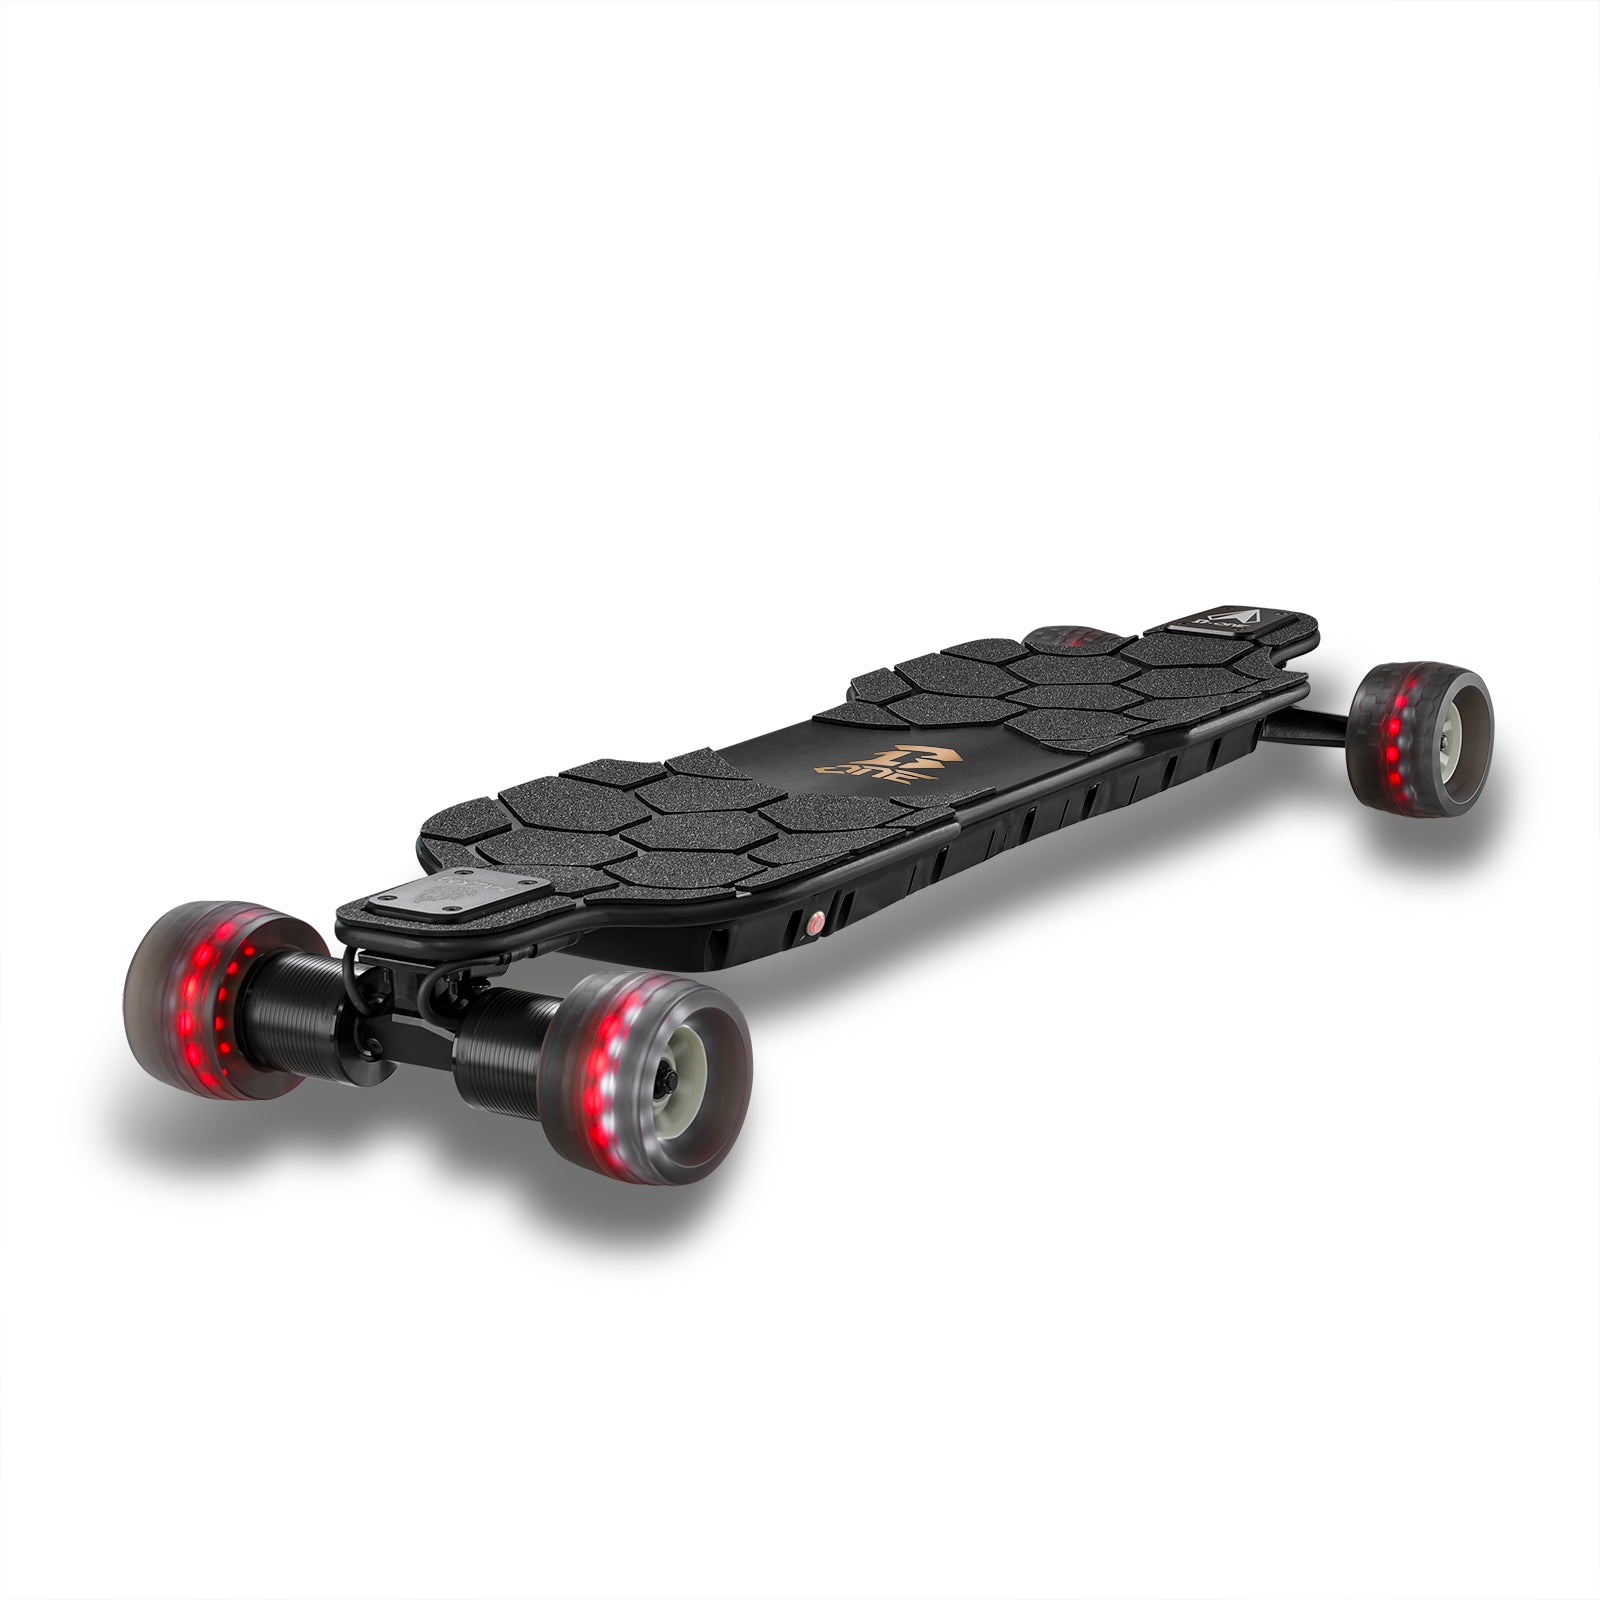 High-speed electric skateboard with 52km range